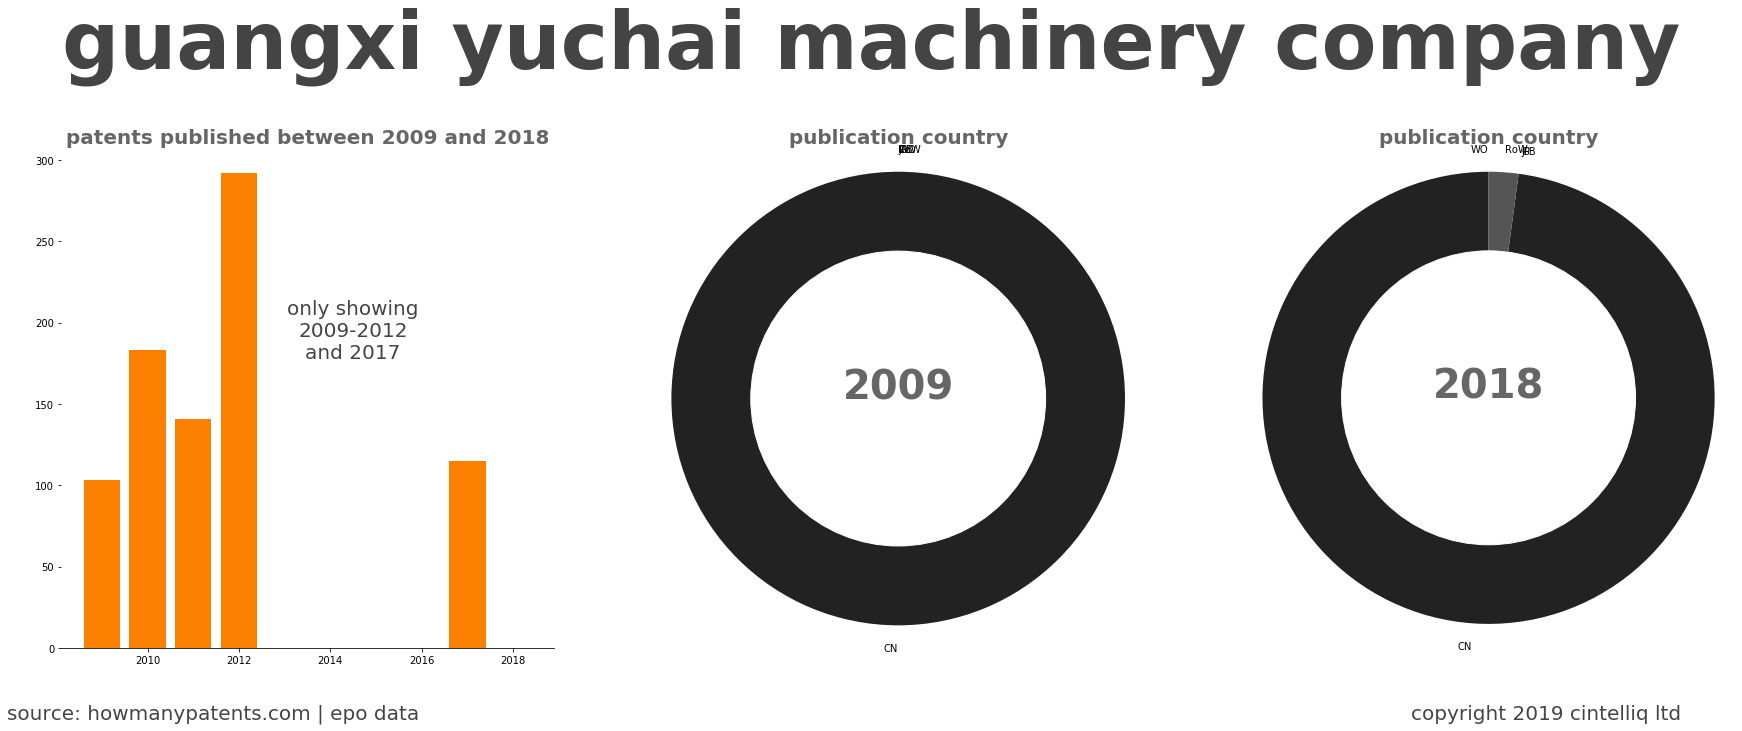 summary of patents for Guangxi Yuchai Machinery Company